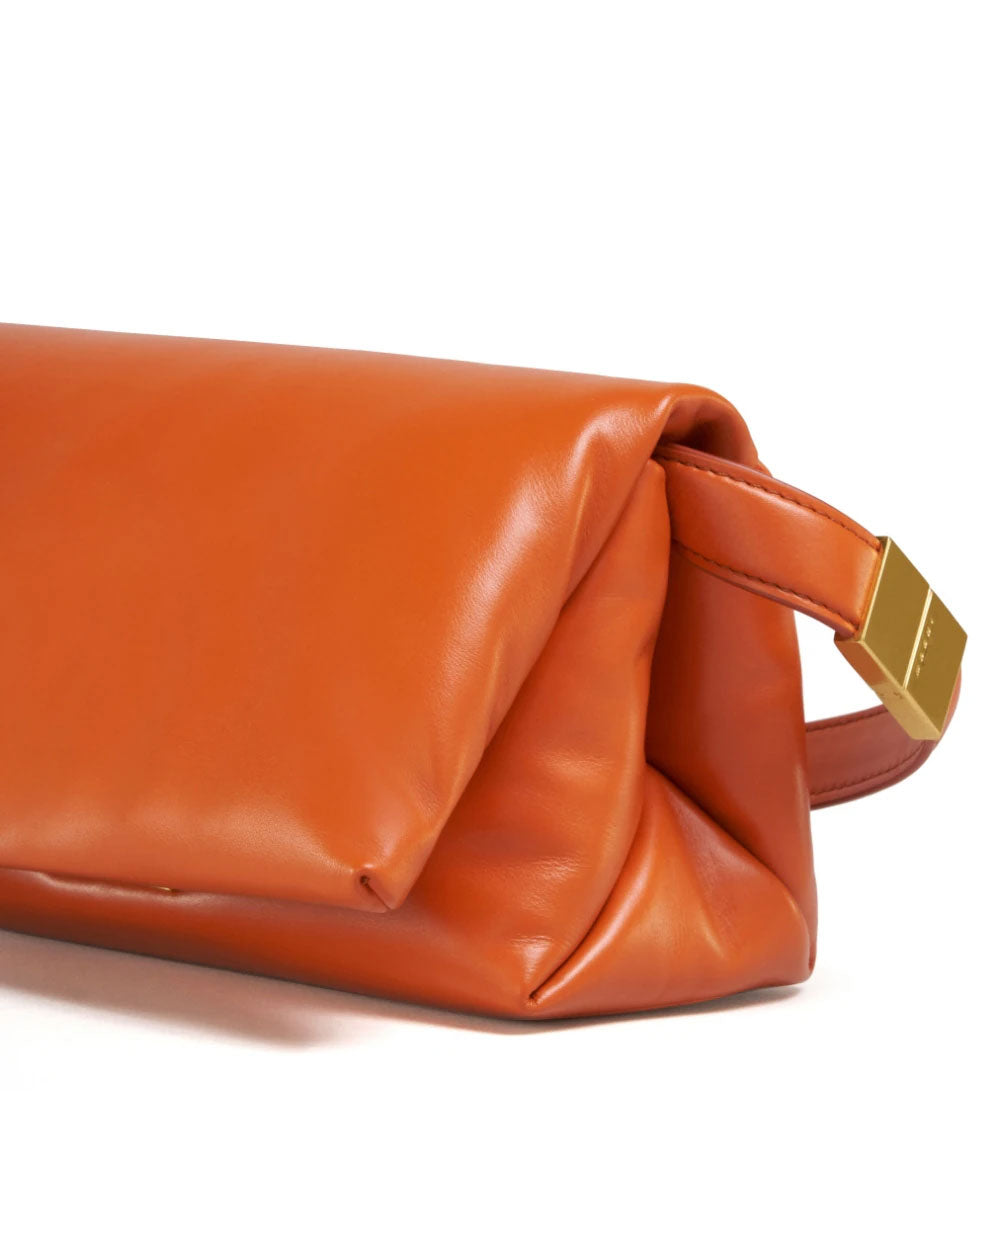 Prisma Small Leather Crossbody Bag in Sunset Orange